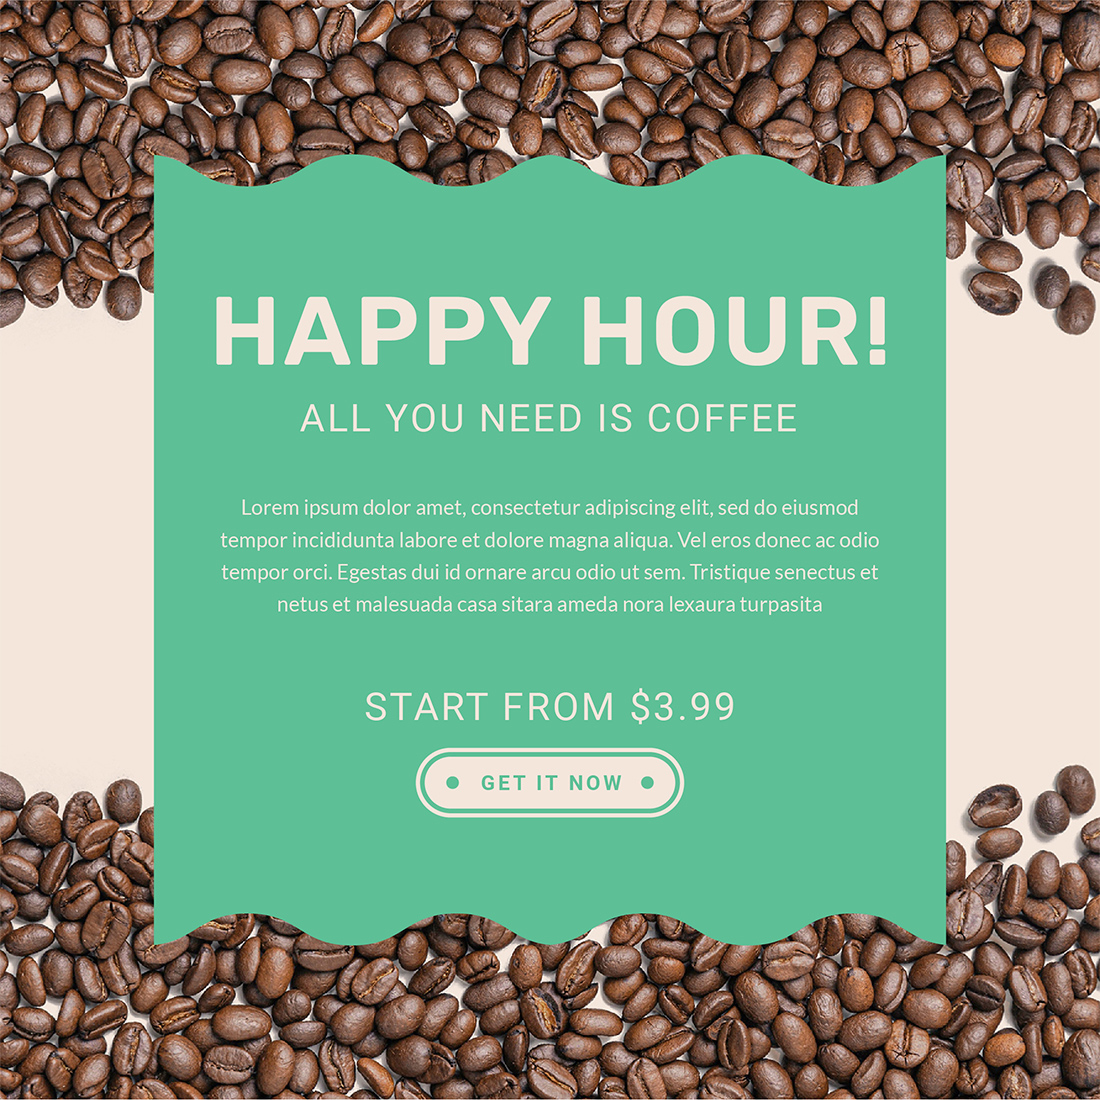 Coffee Shop Social Media Post Templates happy hour example.